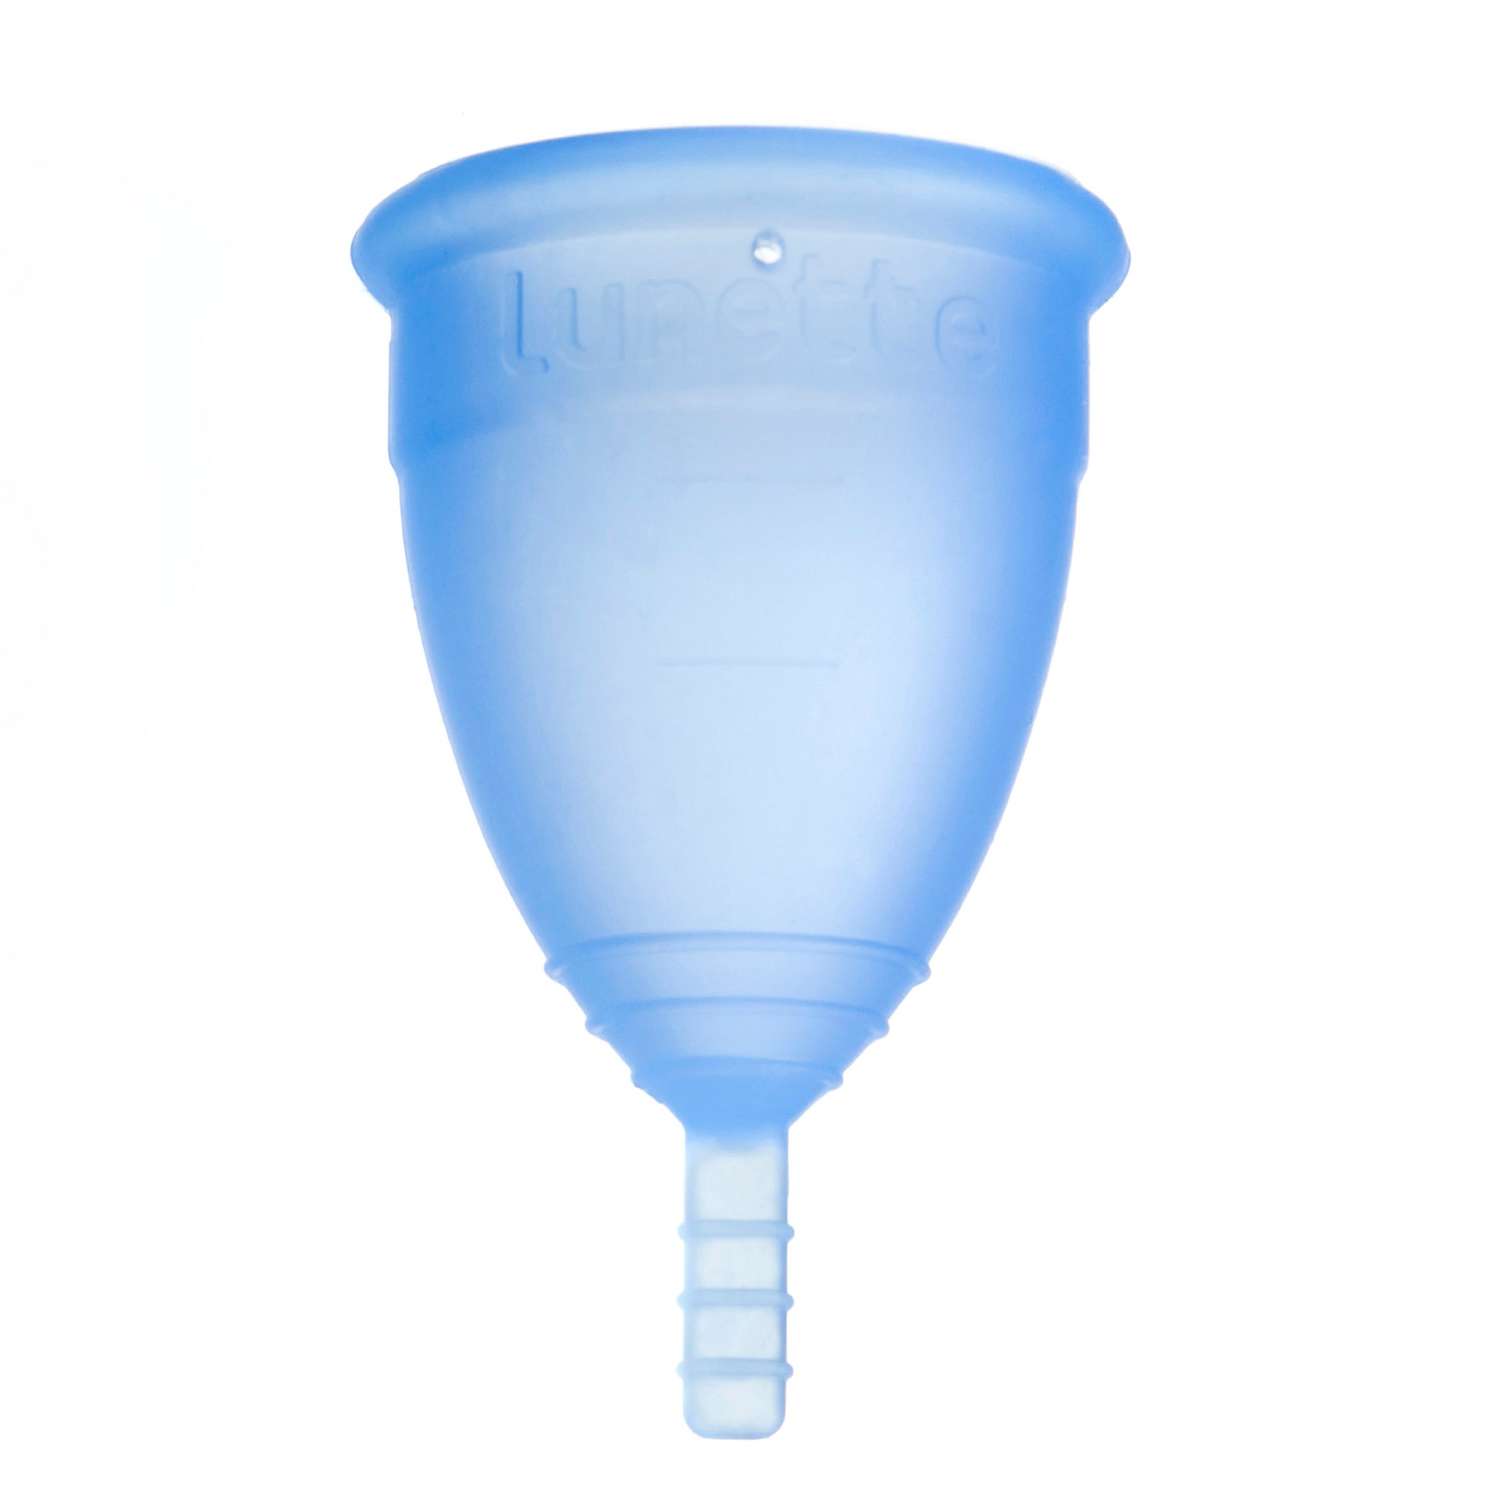 Менструальная чаша Lunette синяя Model 2 - фото 2